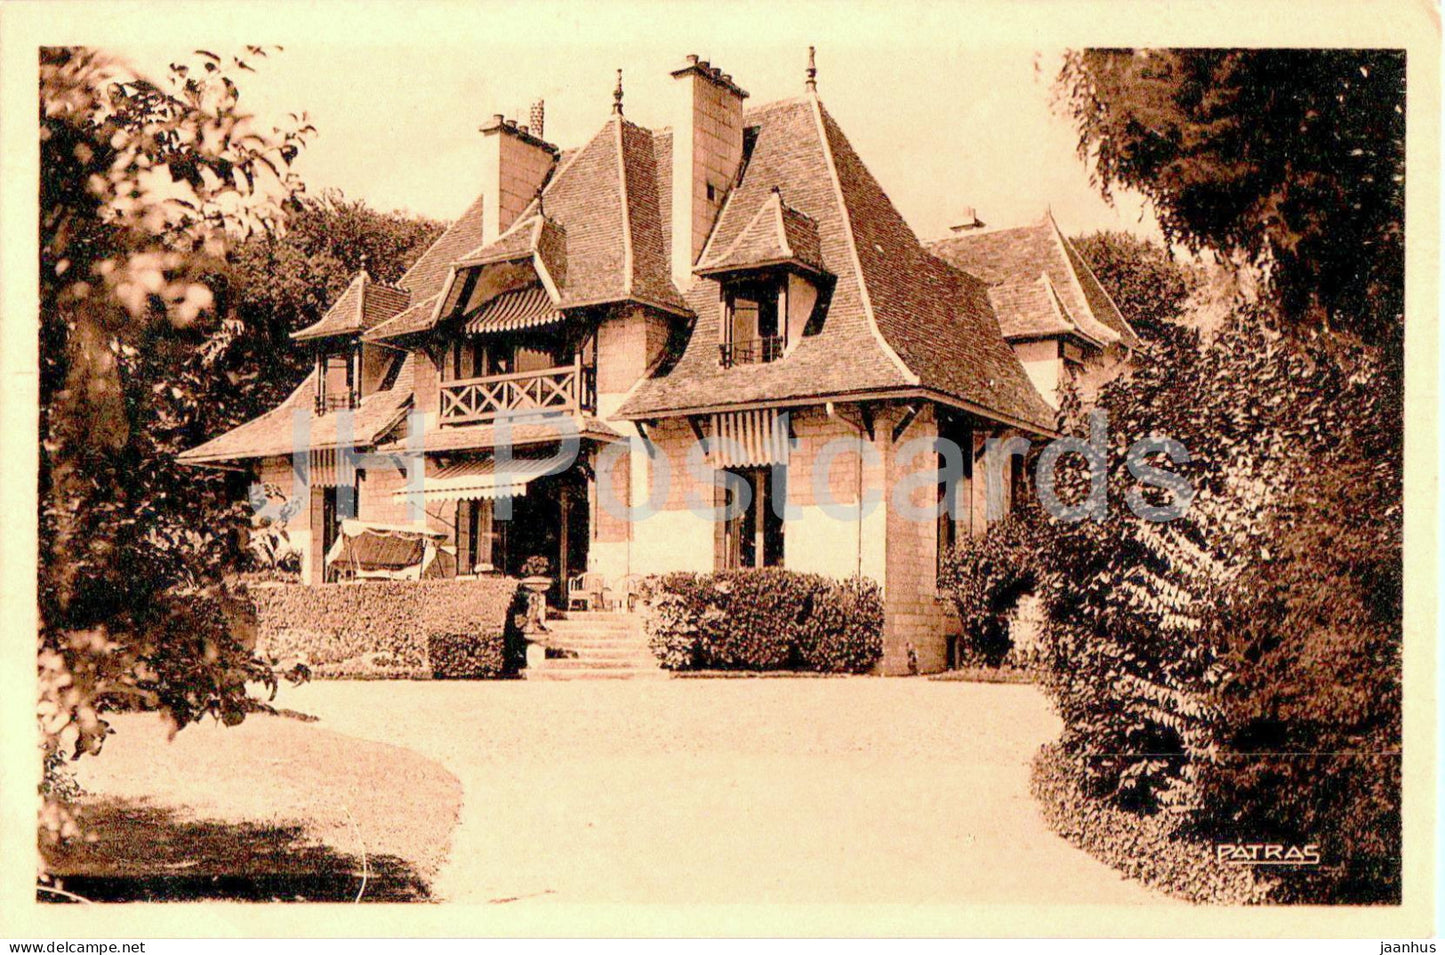 La Forestiere - Trosly Breuil - old postcard - France - used - JH Postcards